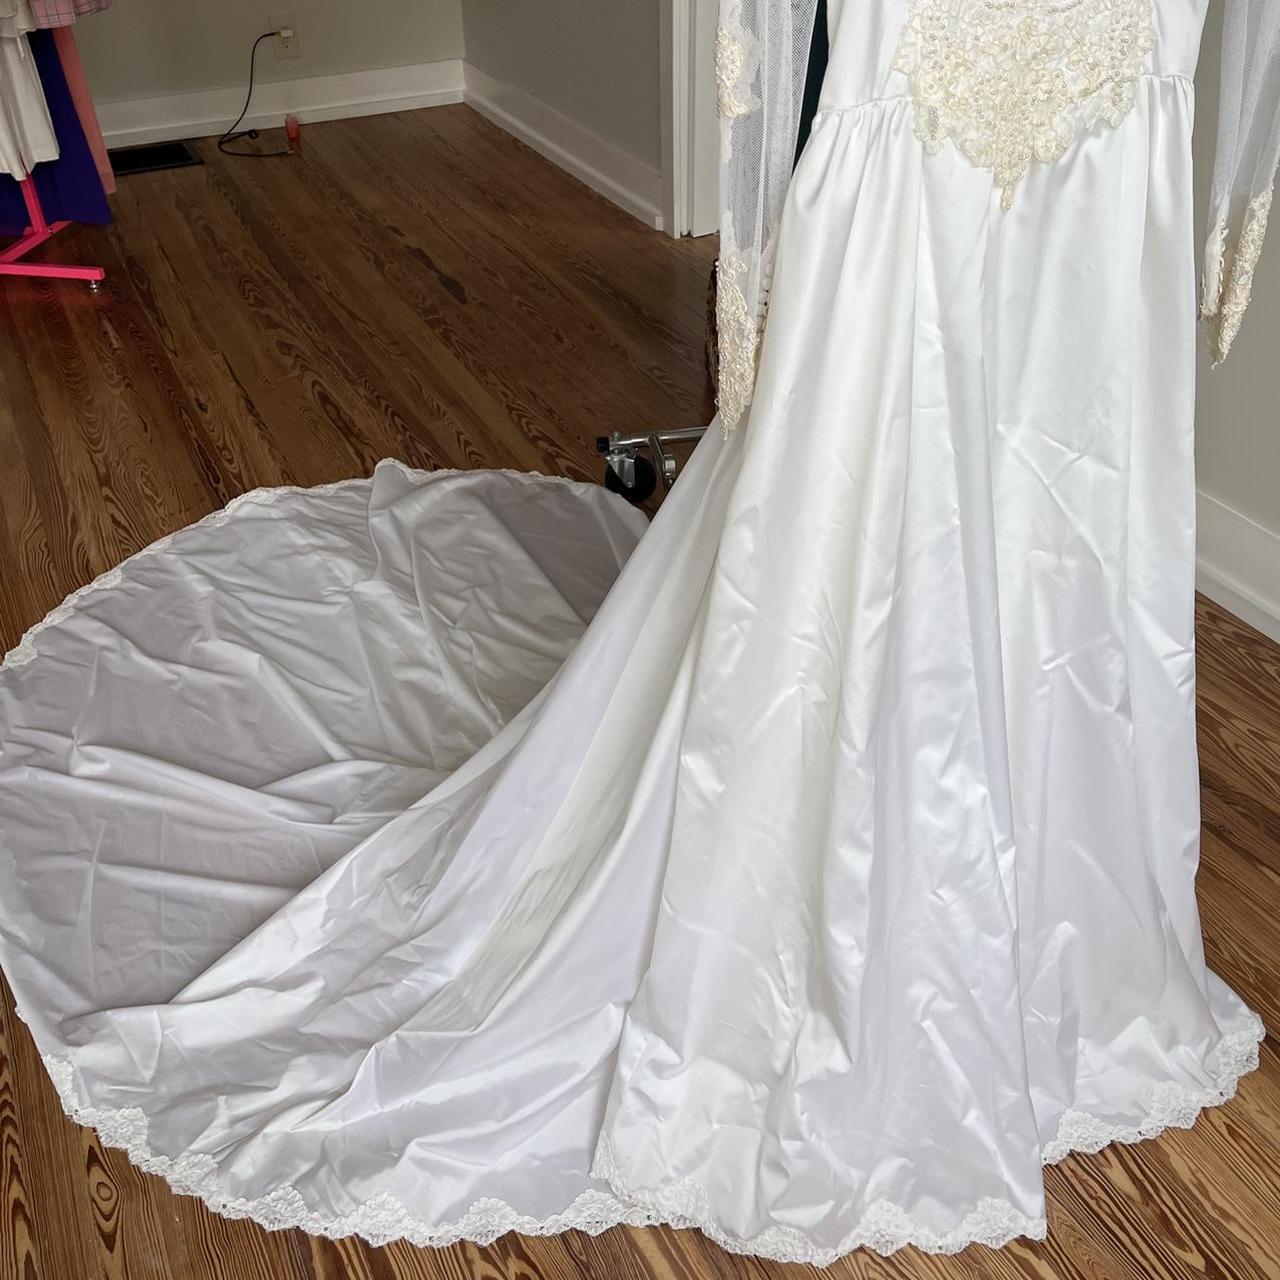 AMAZING 80s wedding dress 🌈 lace appliqués, puffy... - Depop